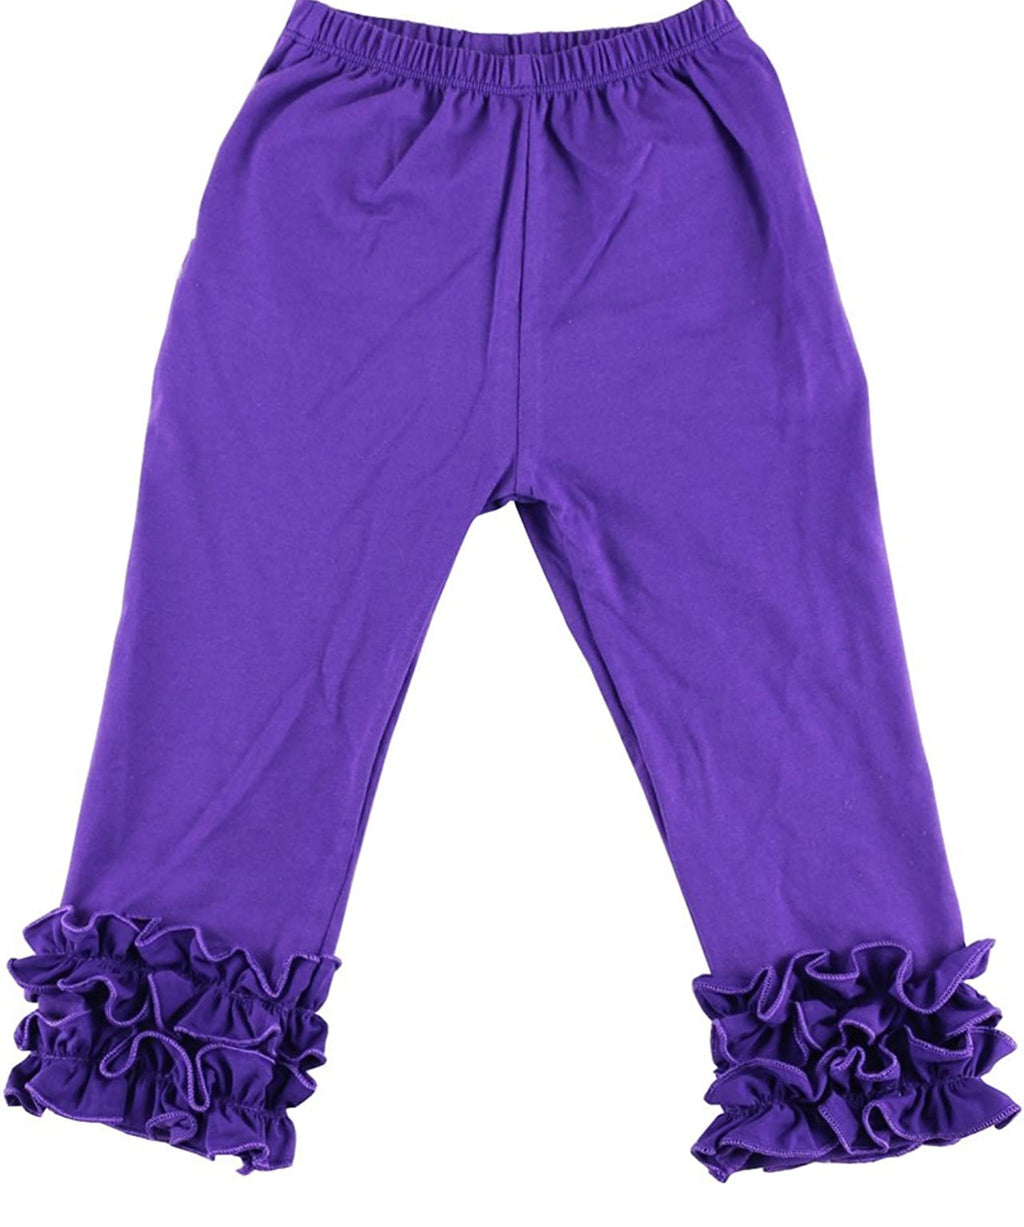 Ruffle Capri Pants in Purple